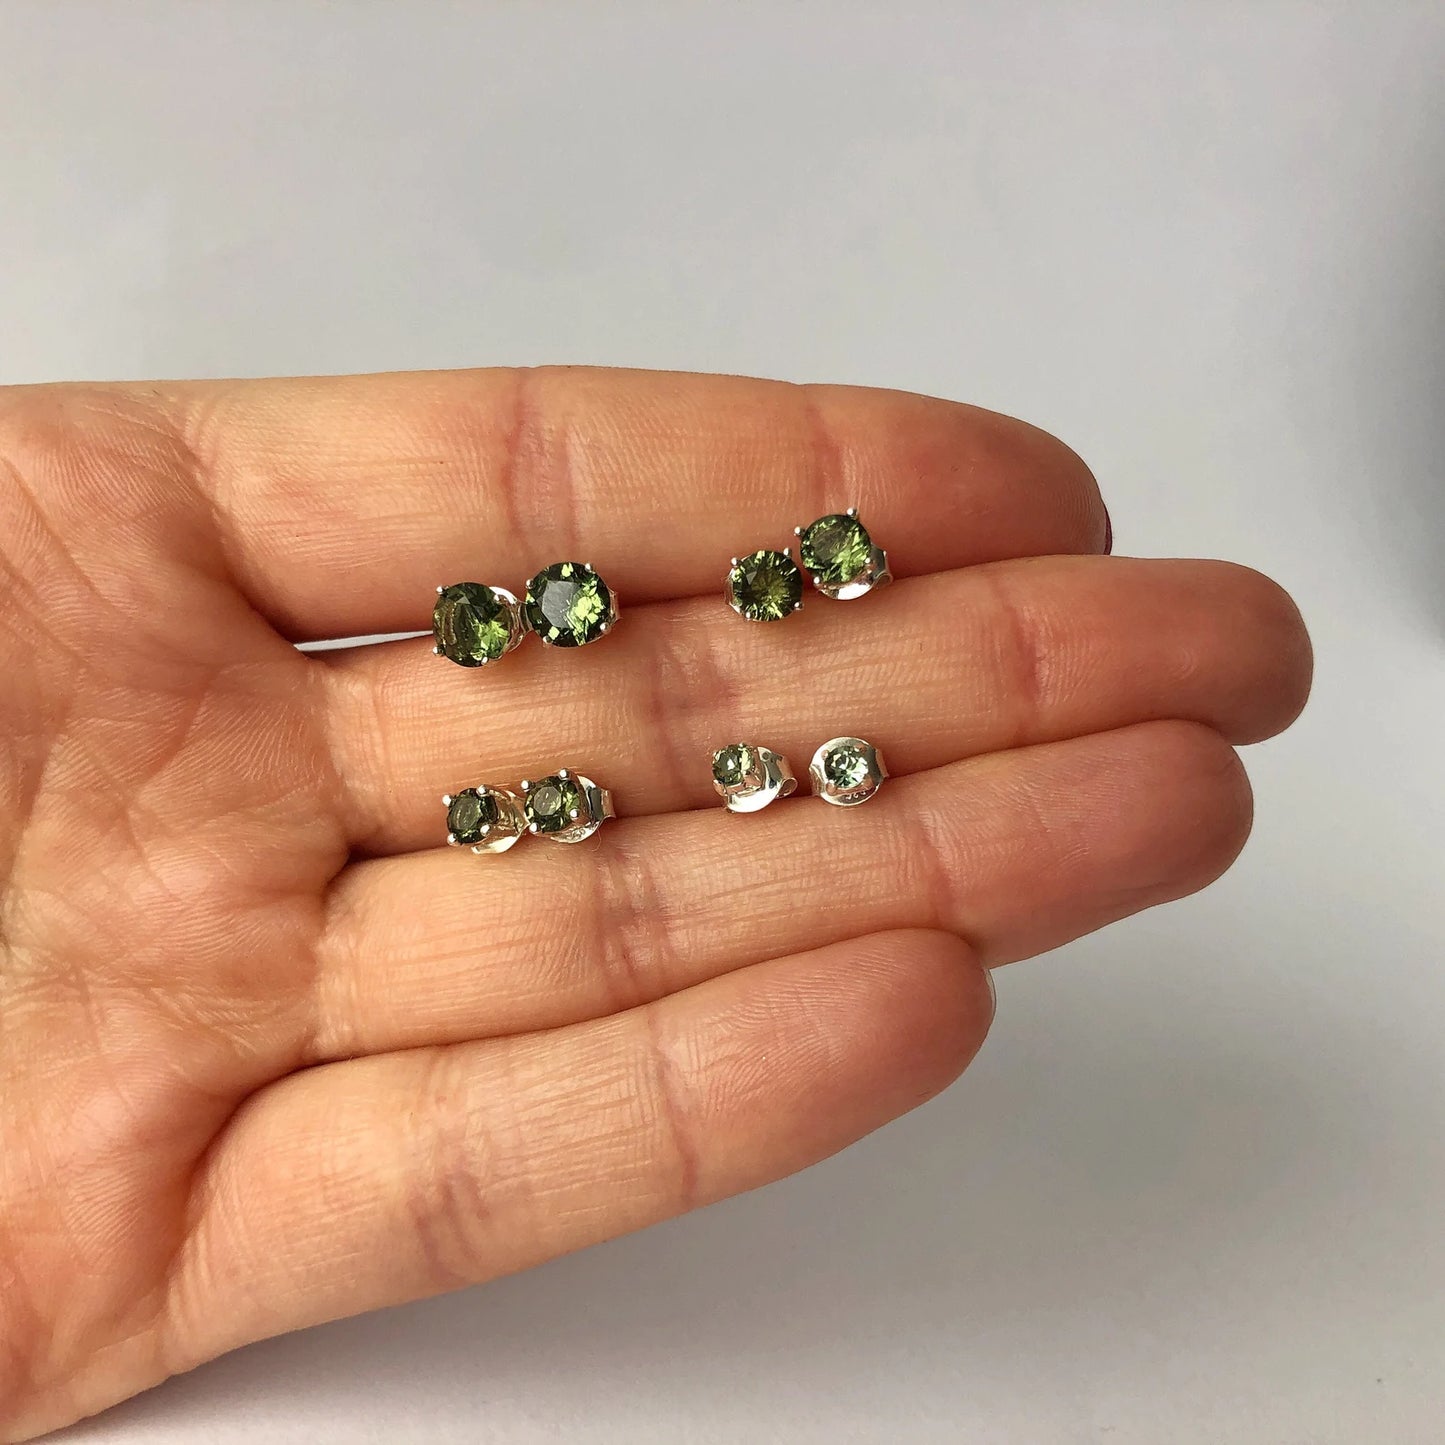 CZECH MOLDAVITE Stud Earrings 3 - 6 mm Sterling Silver Moldavite jewelry, genuine moldavite gemstone earrings Certified moldavite earrings